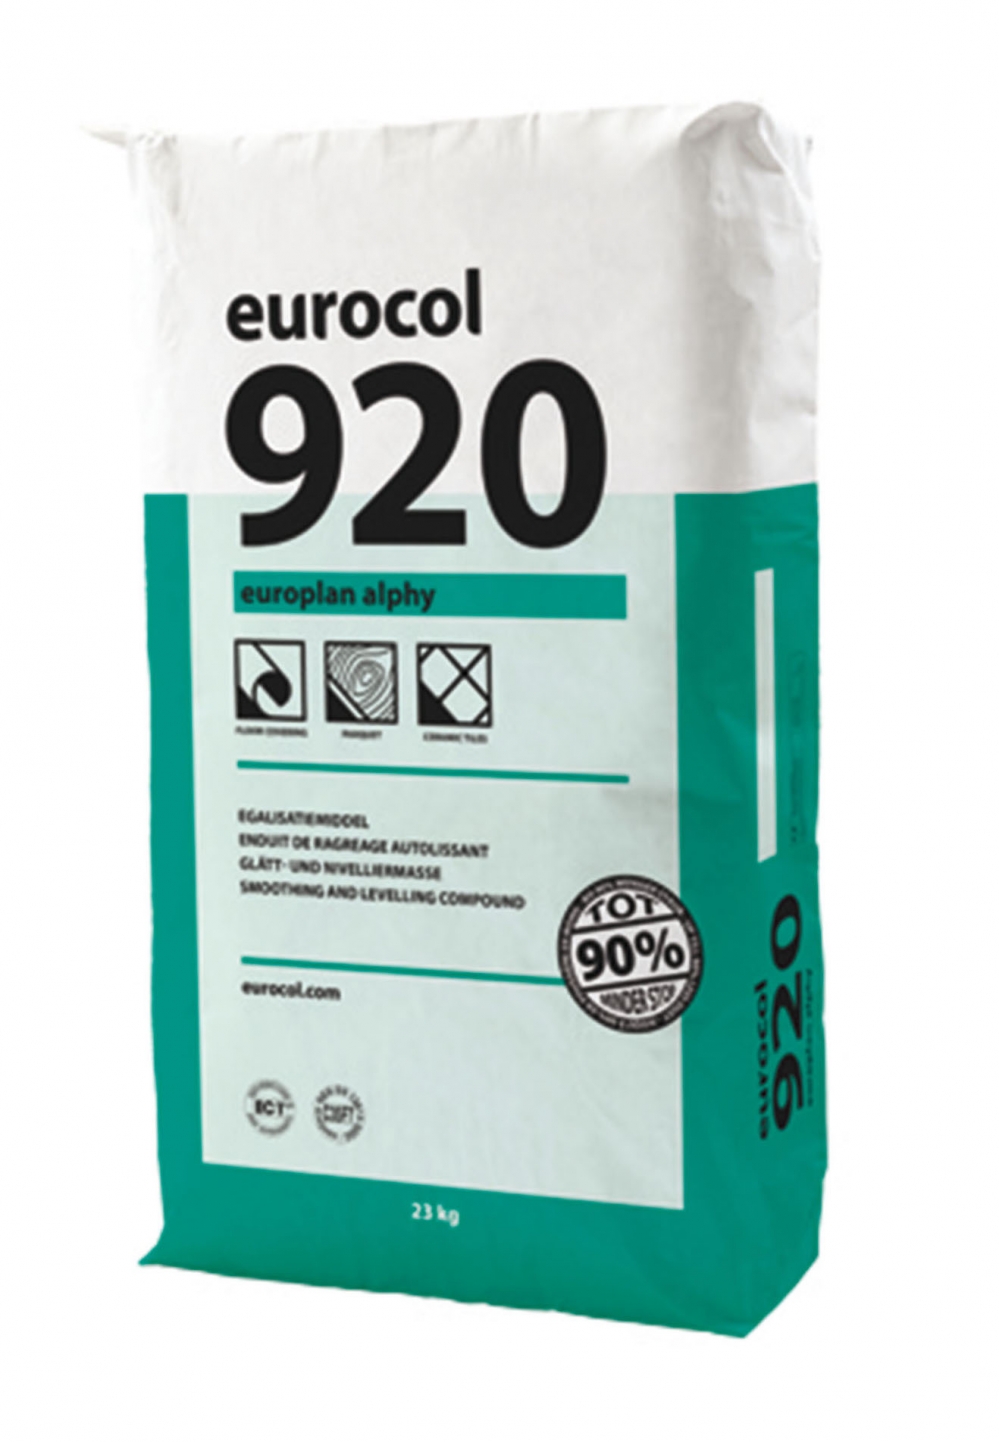 Eurocol-920-egaline